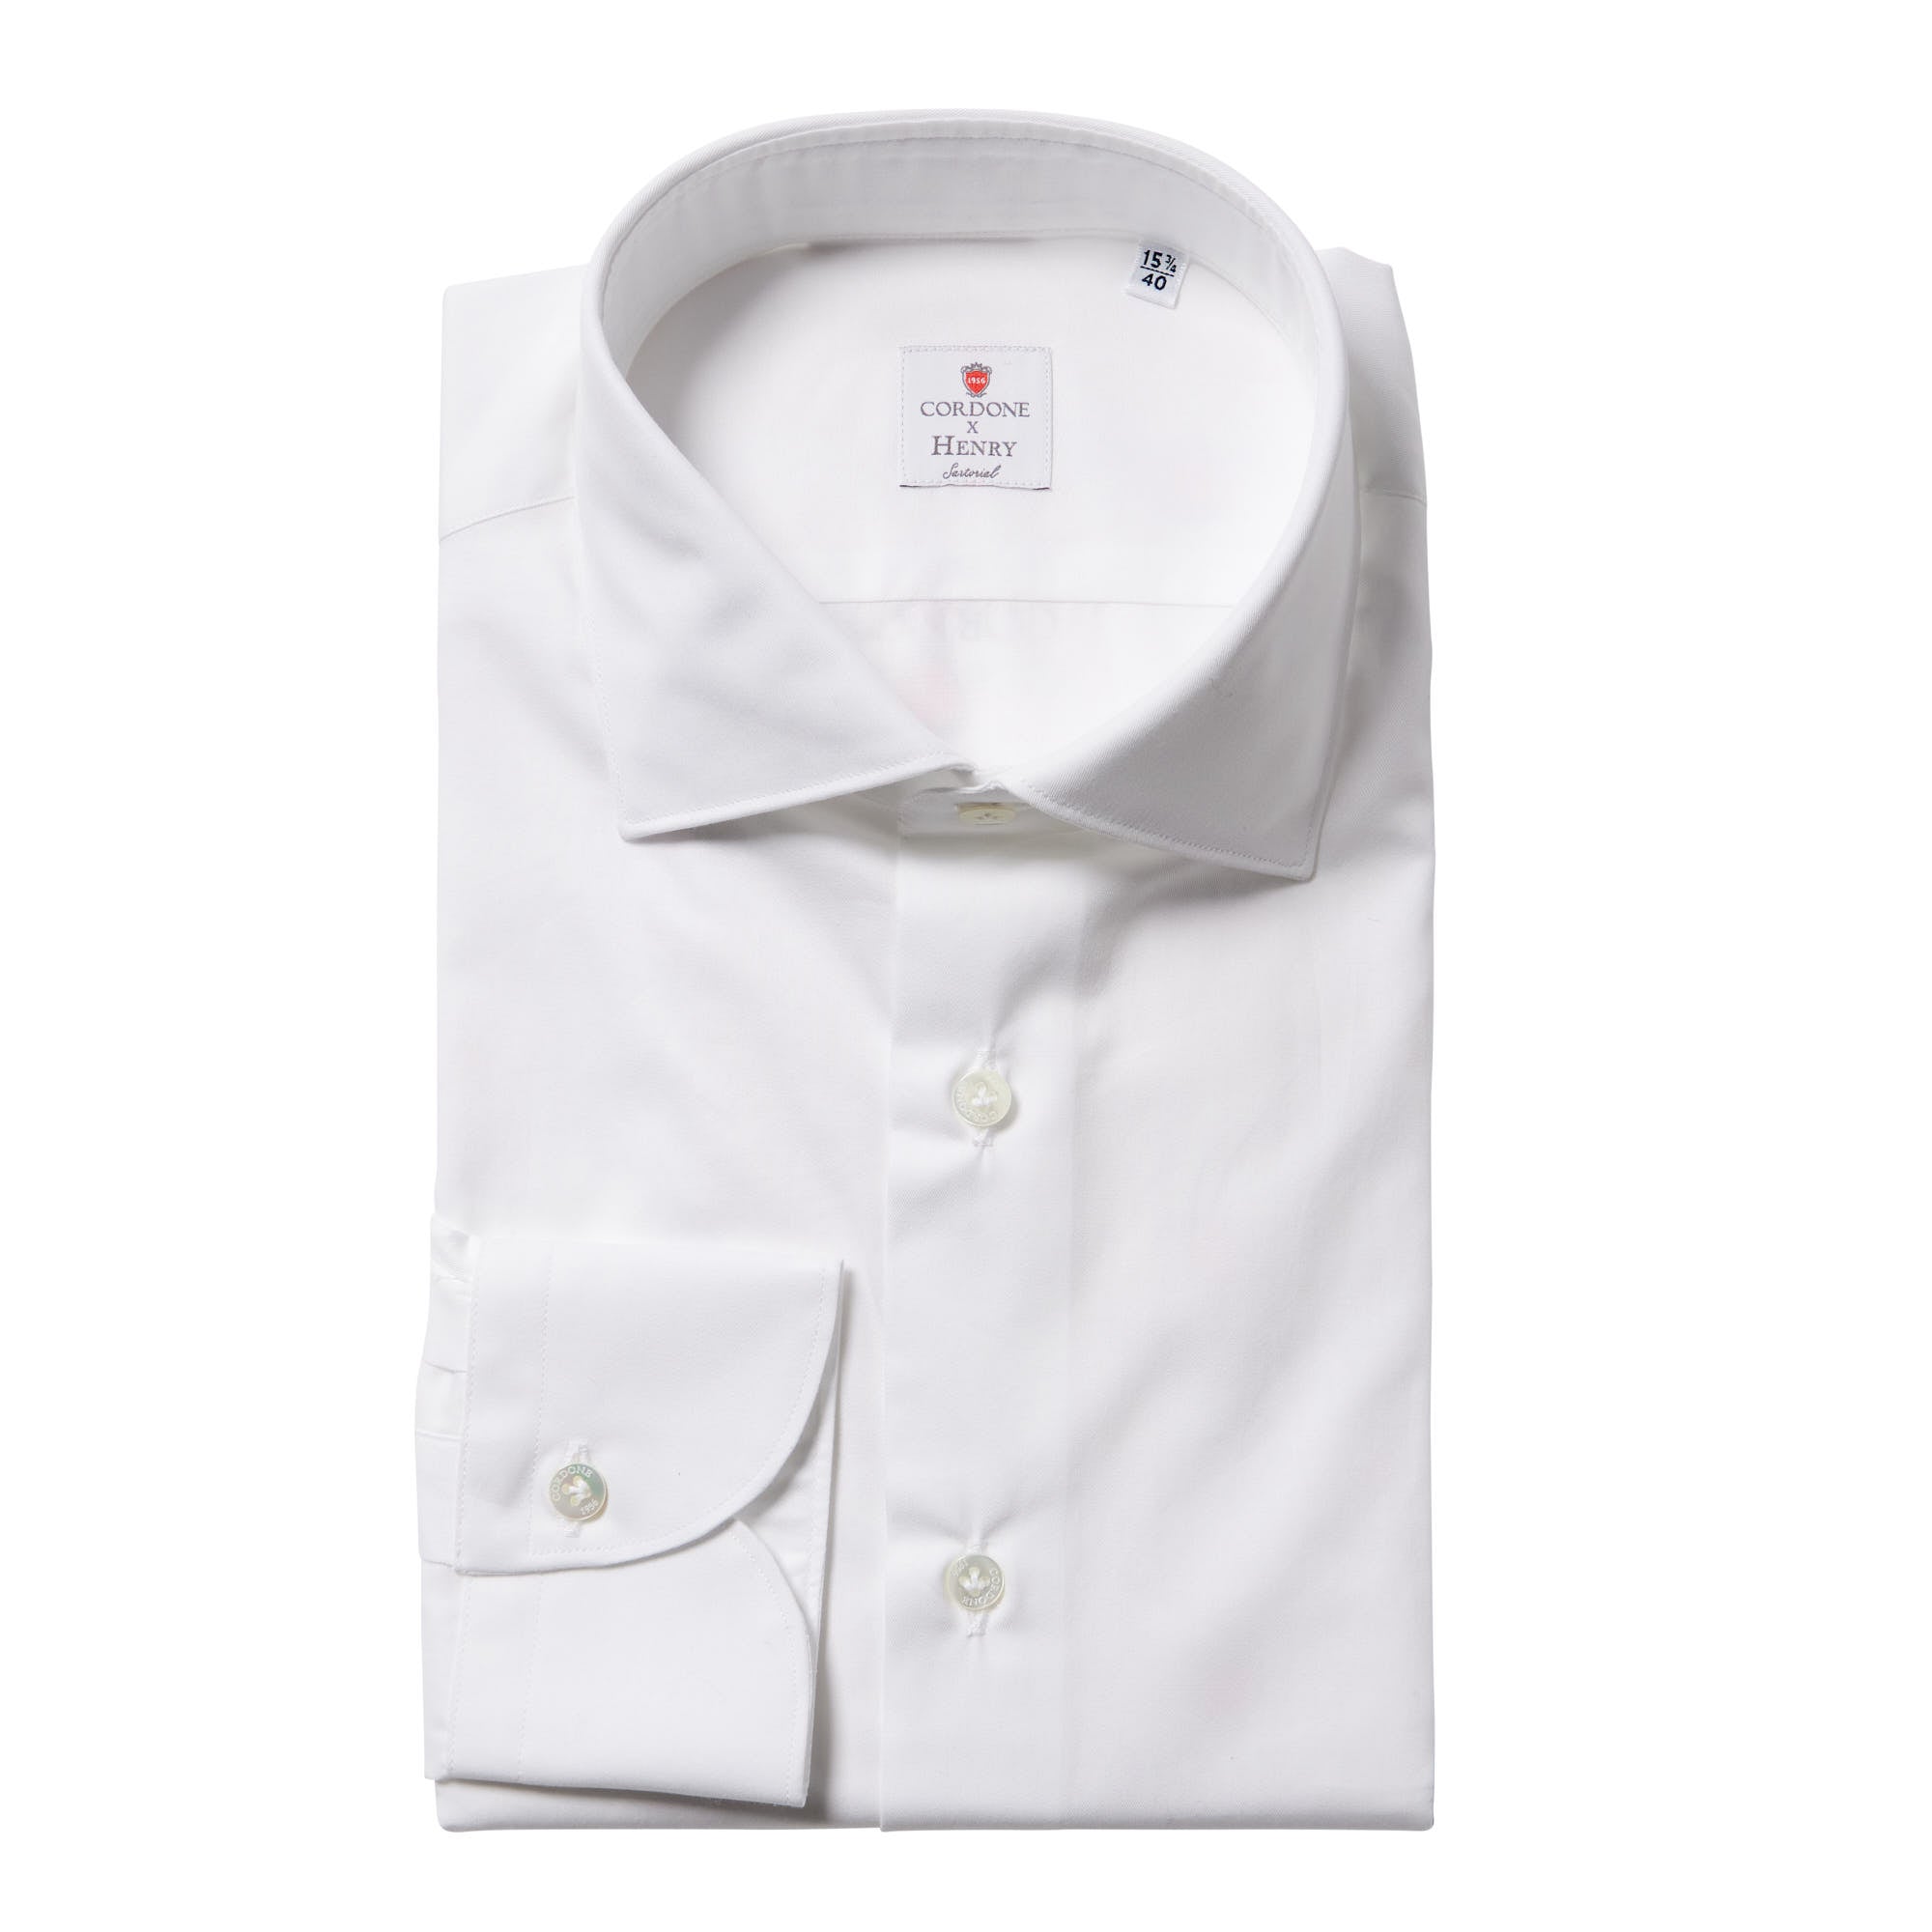 CORDONE Cotton Long Sleeve Single Cuff Shirt WHITE - Henry BucksShirts38AW240077 - WHTE - SC - 39